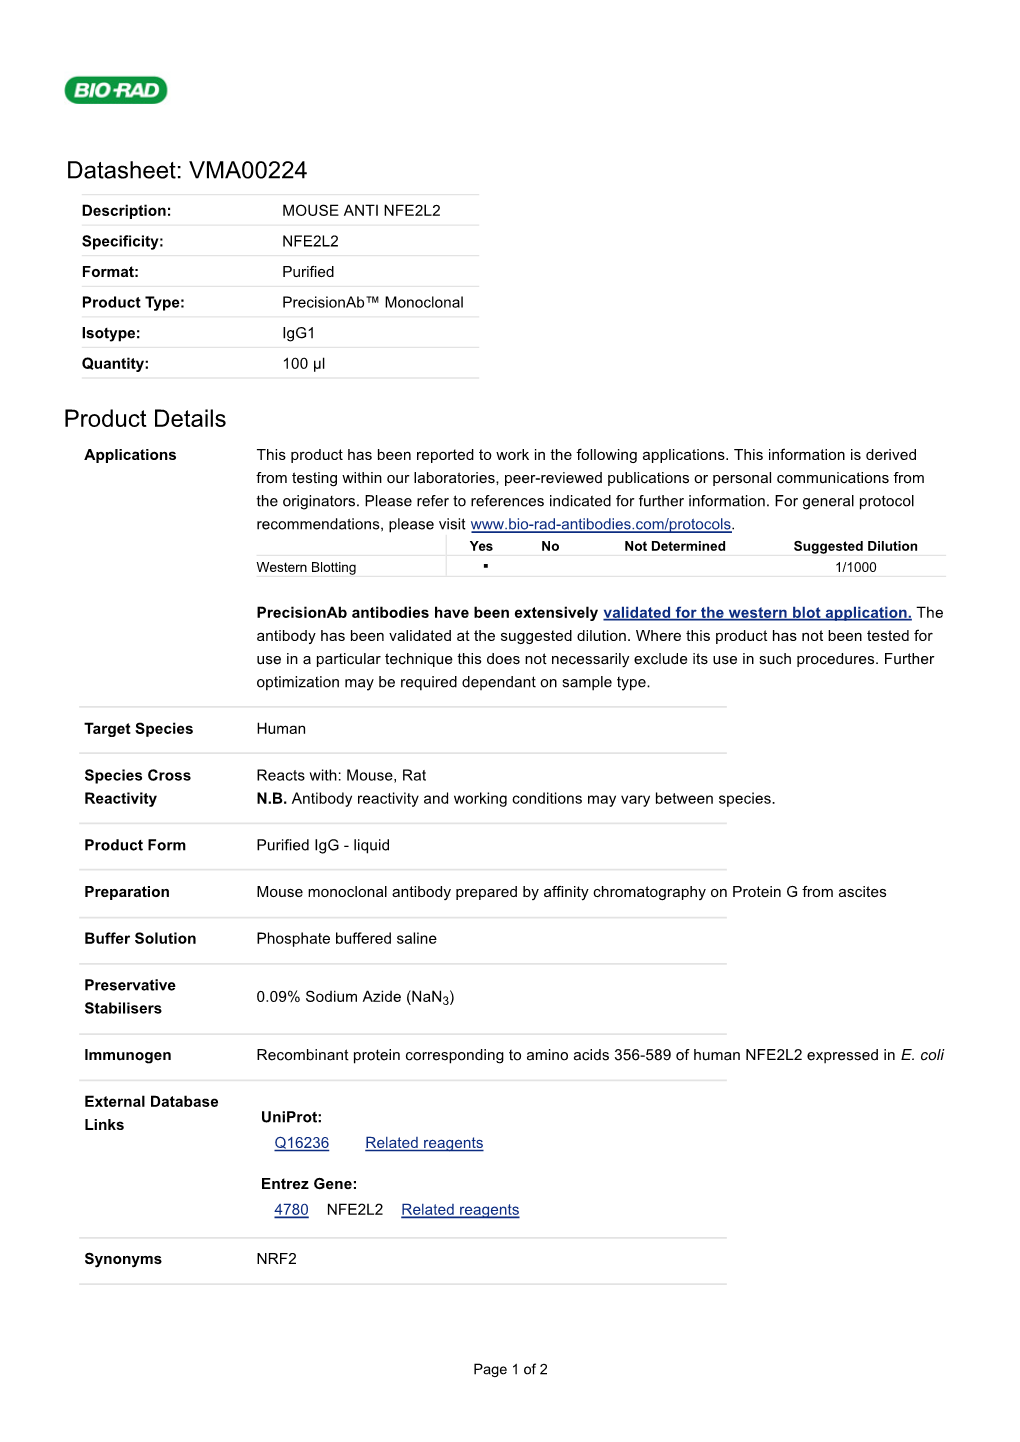 Datasheet: VMA00224 Product Details